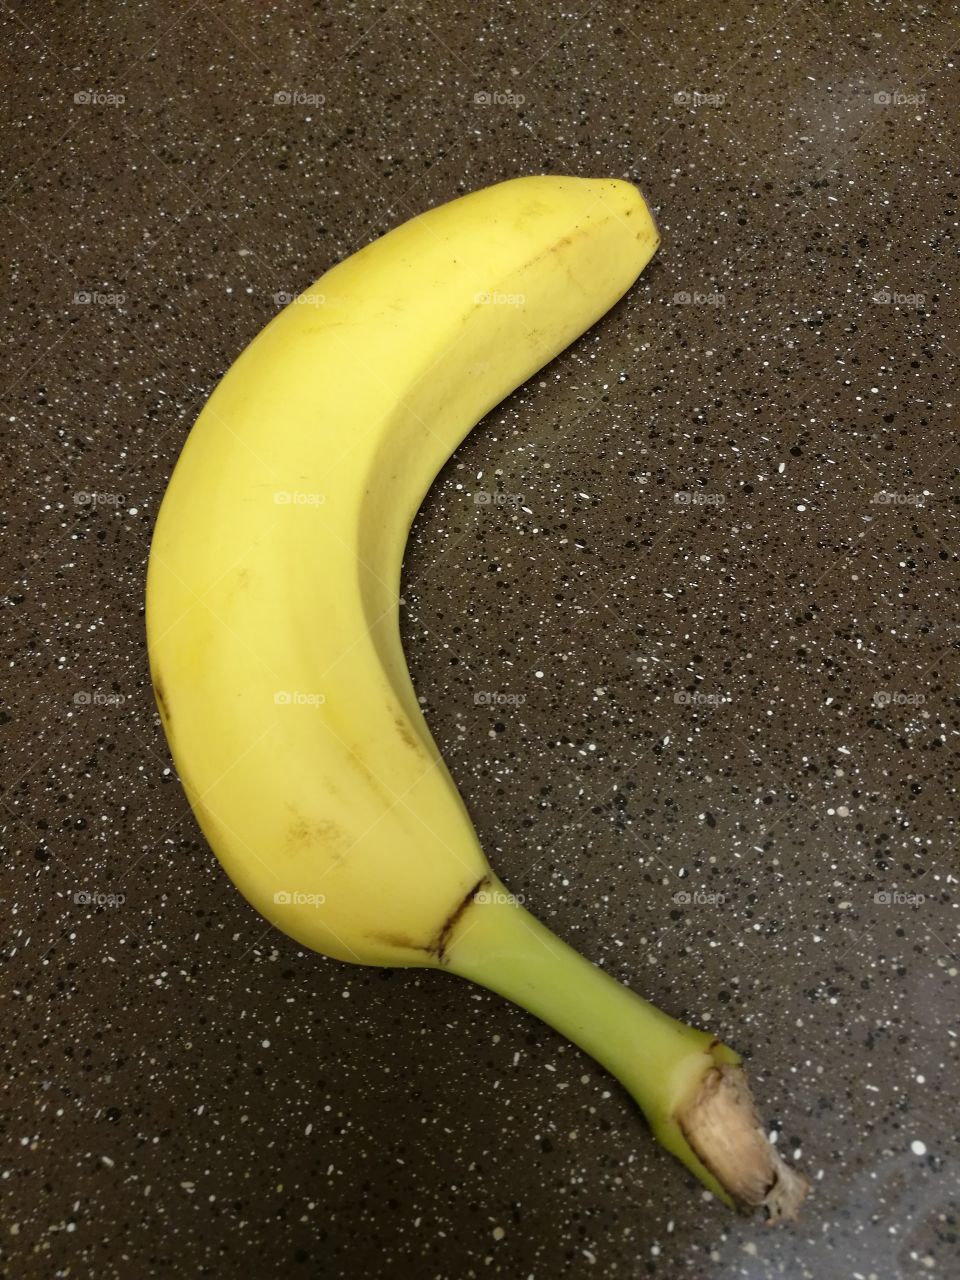 Ripe banana on counter